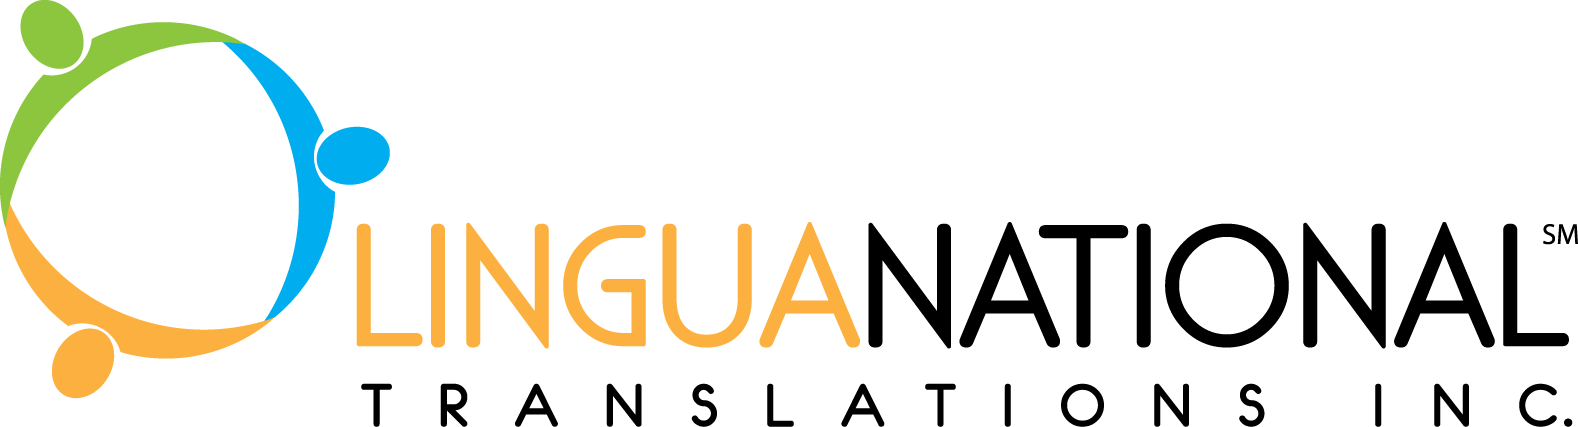 liguanational-logo1-13-16